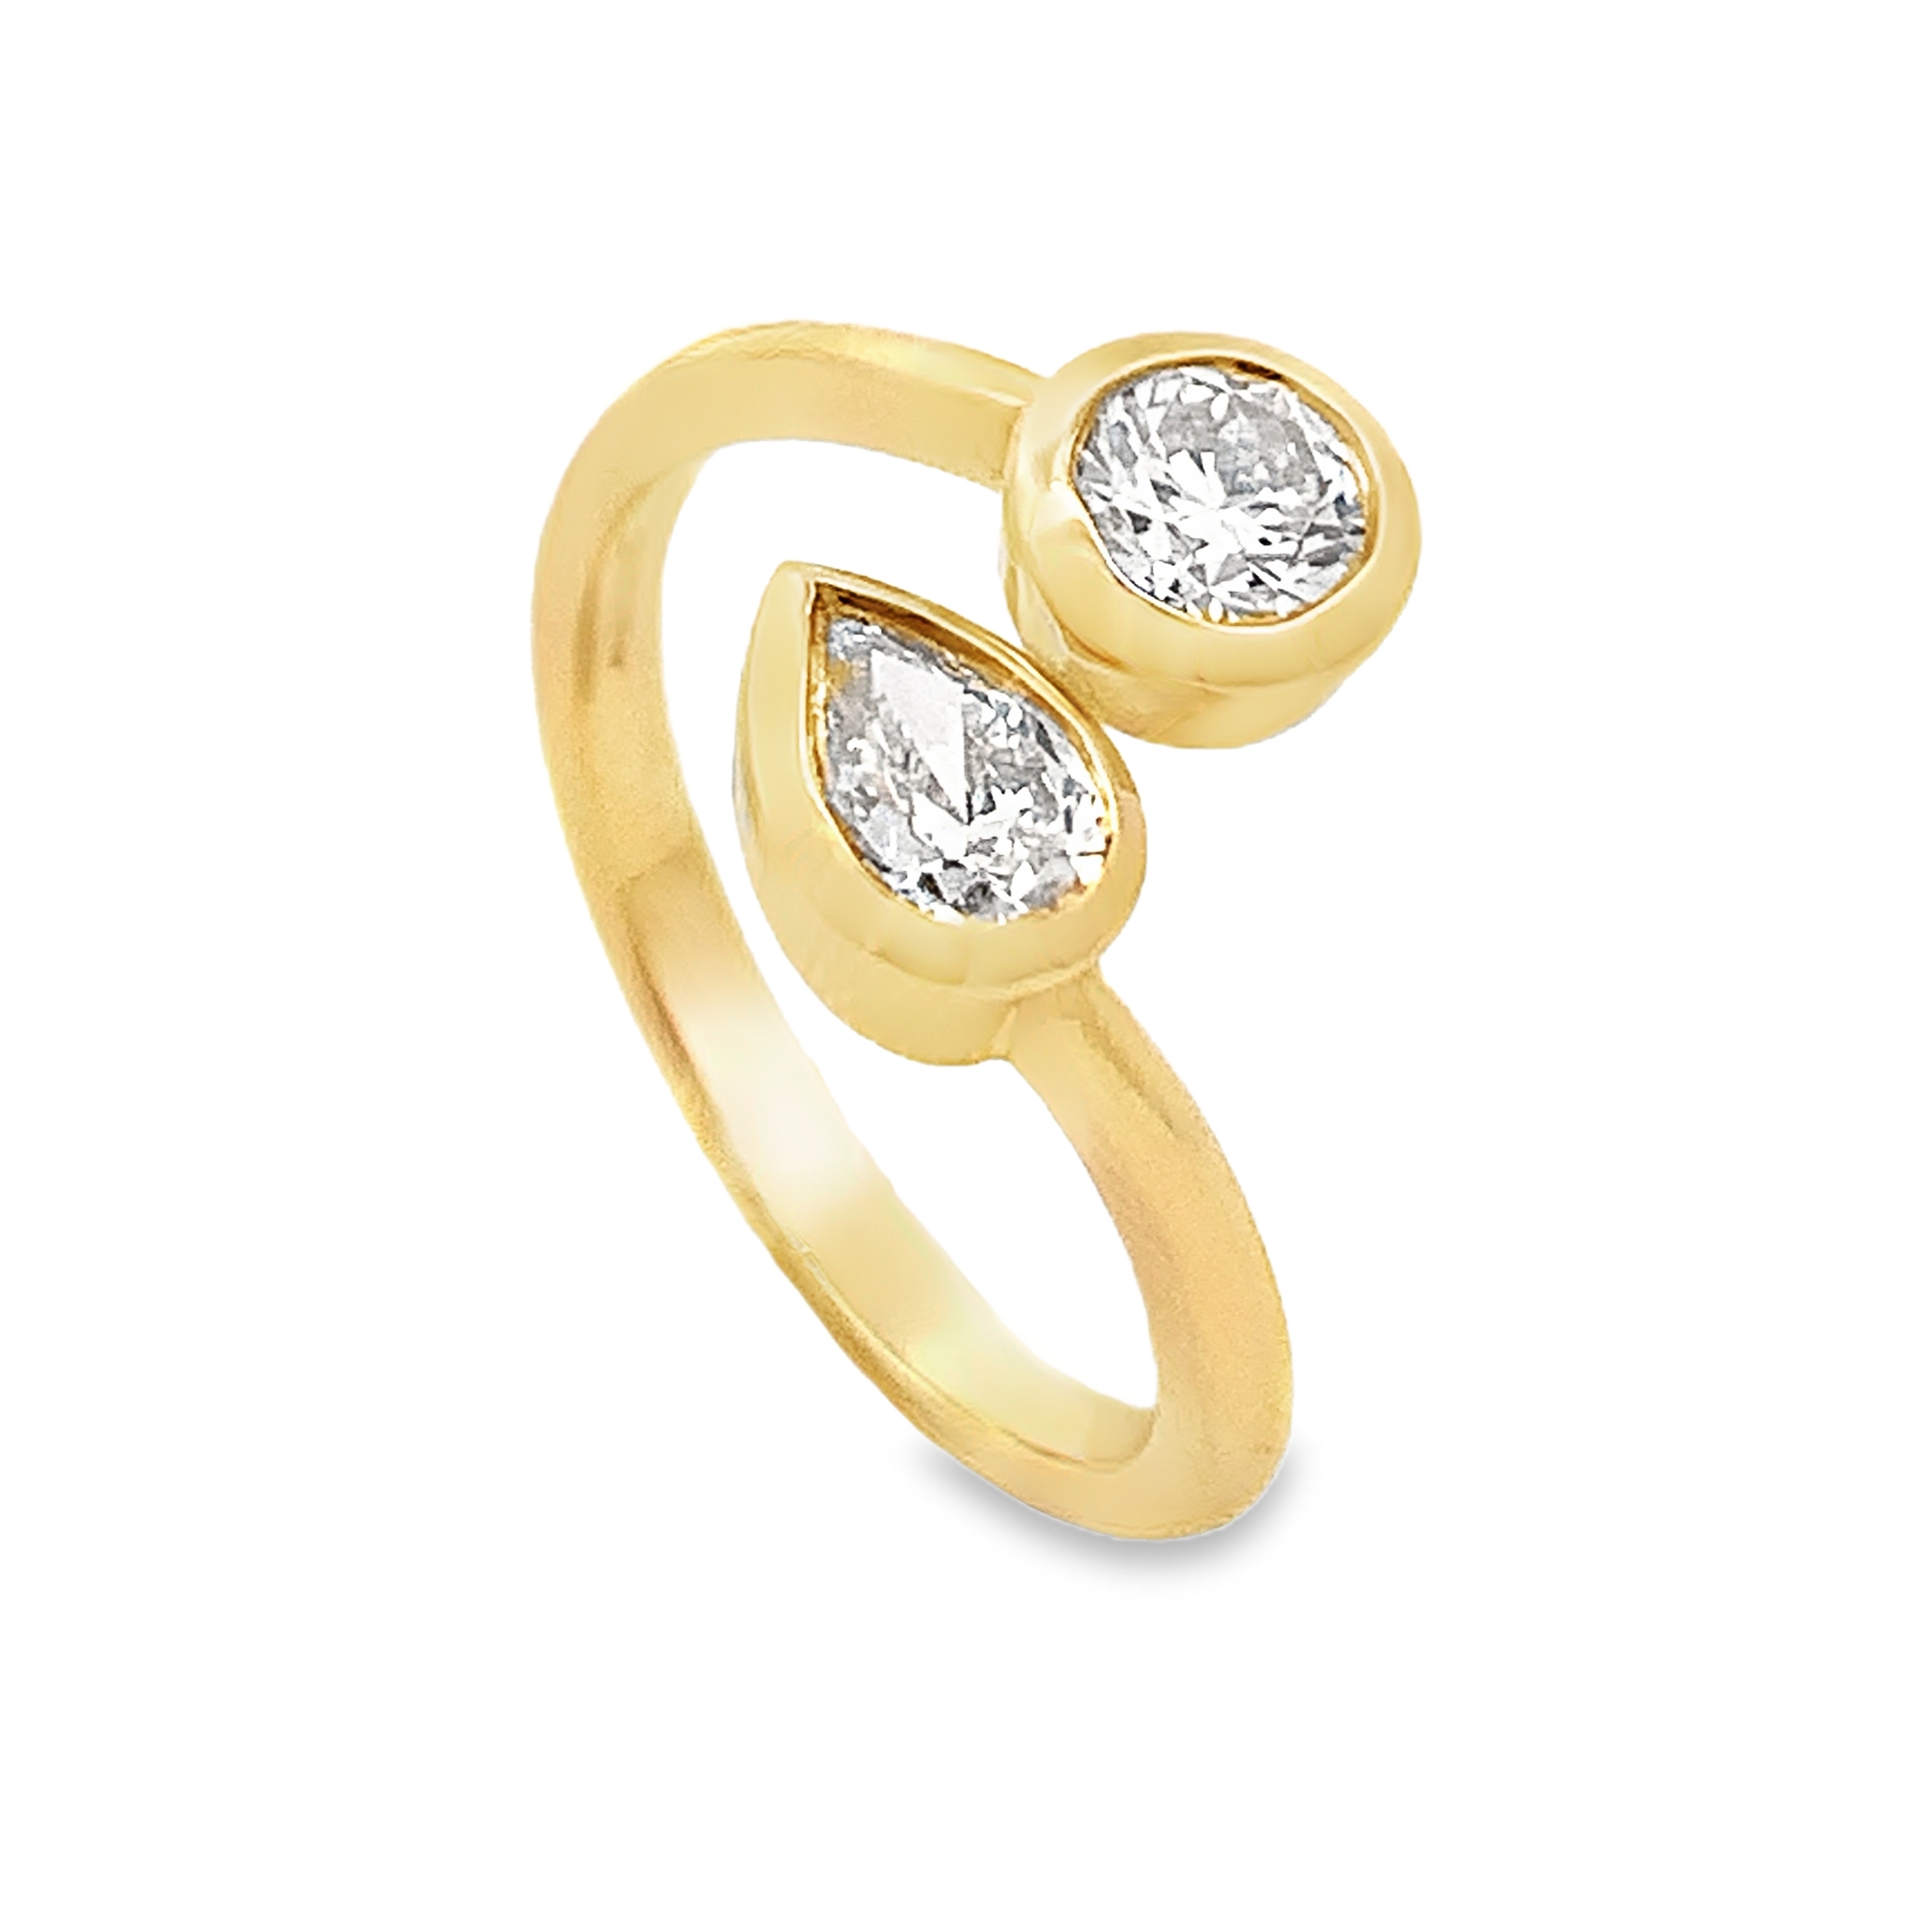 Norman Silverman 18K Yellow Gold 2-Stone Diamond Bypass Ring